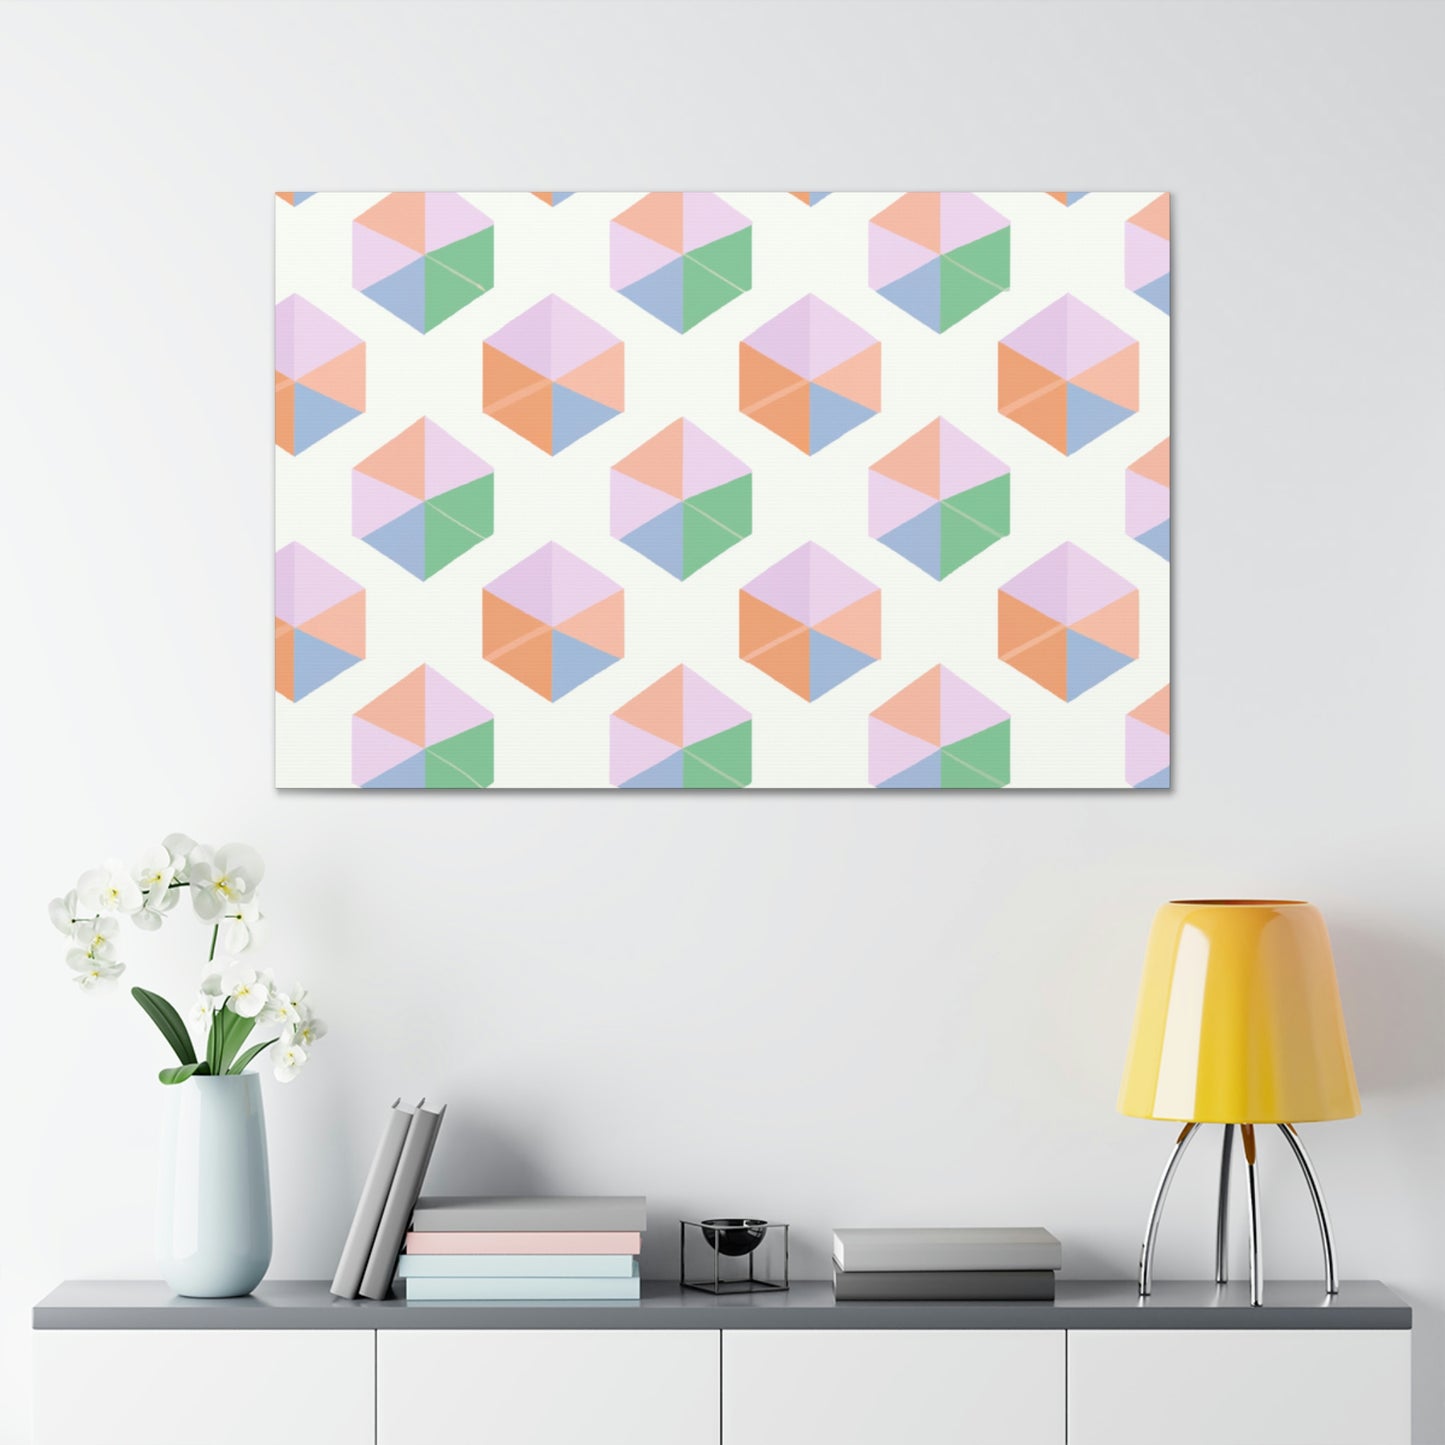 Abigail Fairweather - Geometric Canvas Wall Art